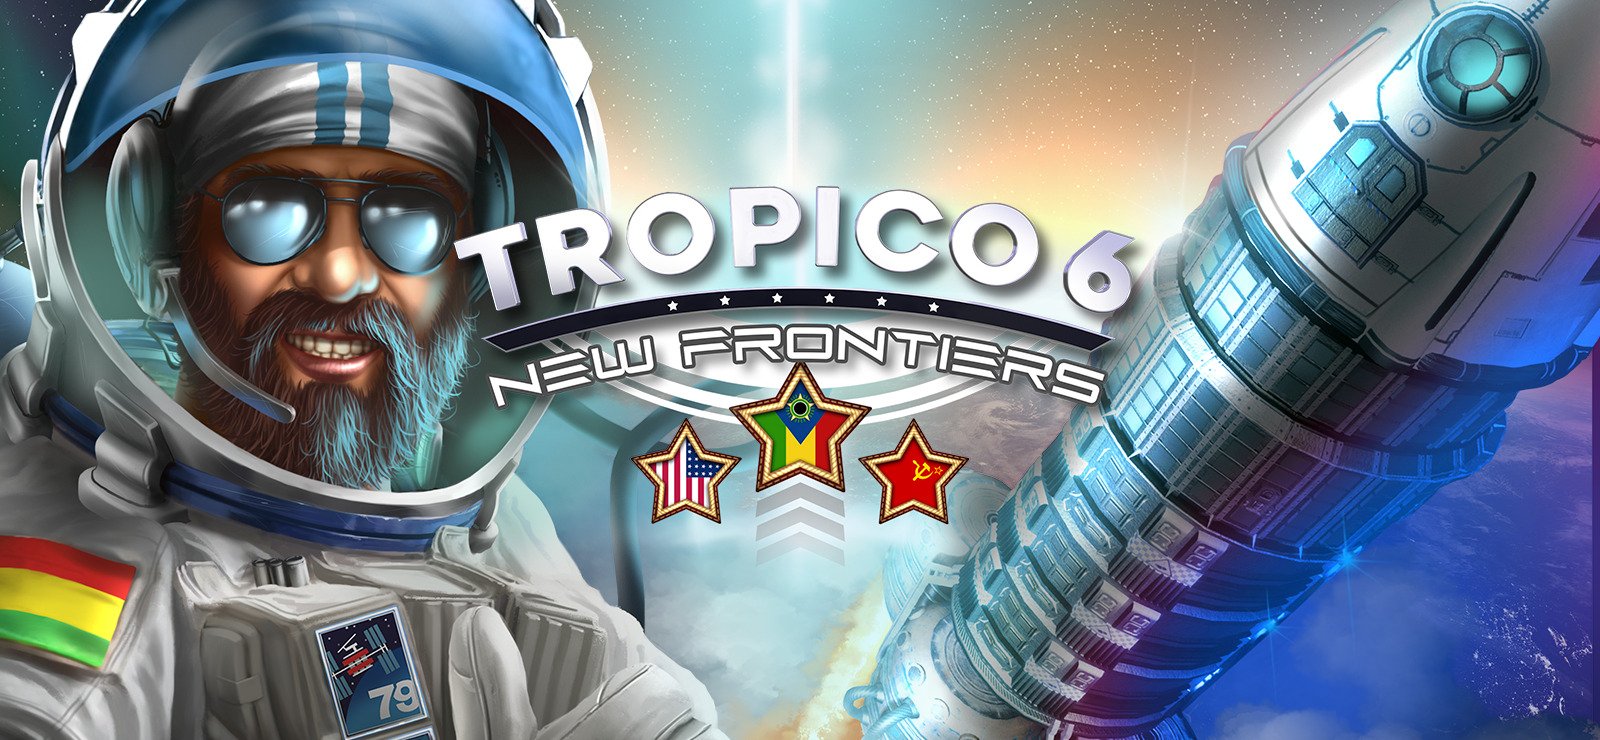 Tropico 6 New Frontiers 11